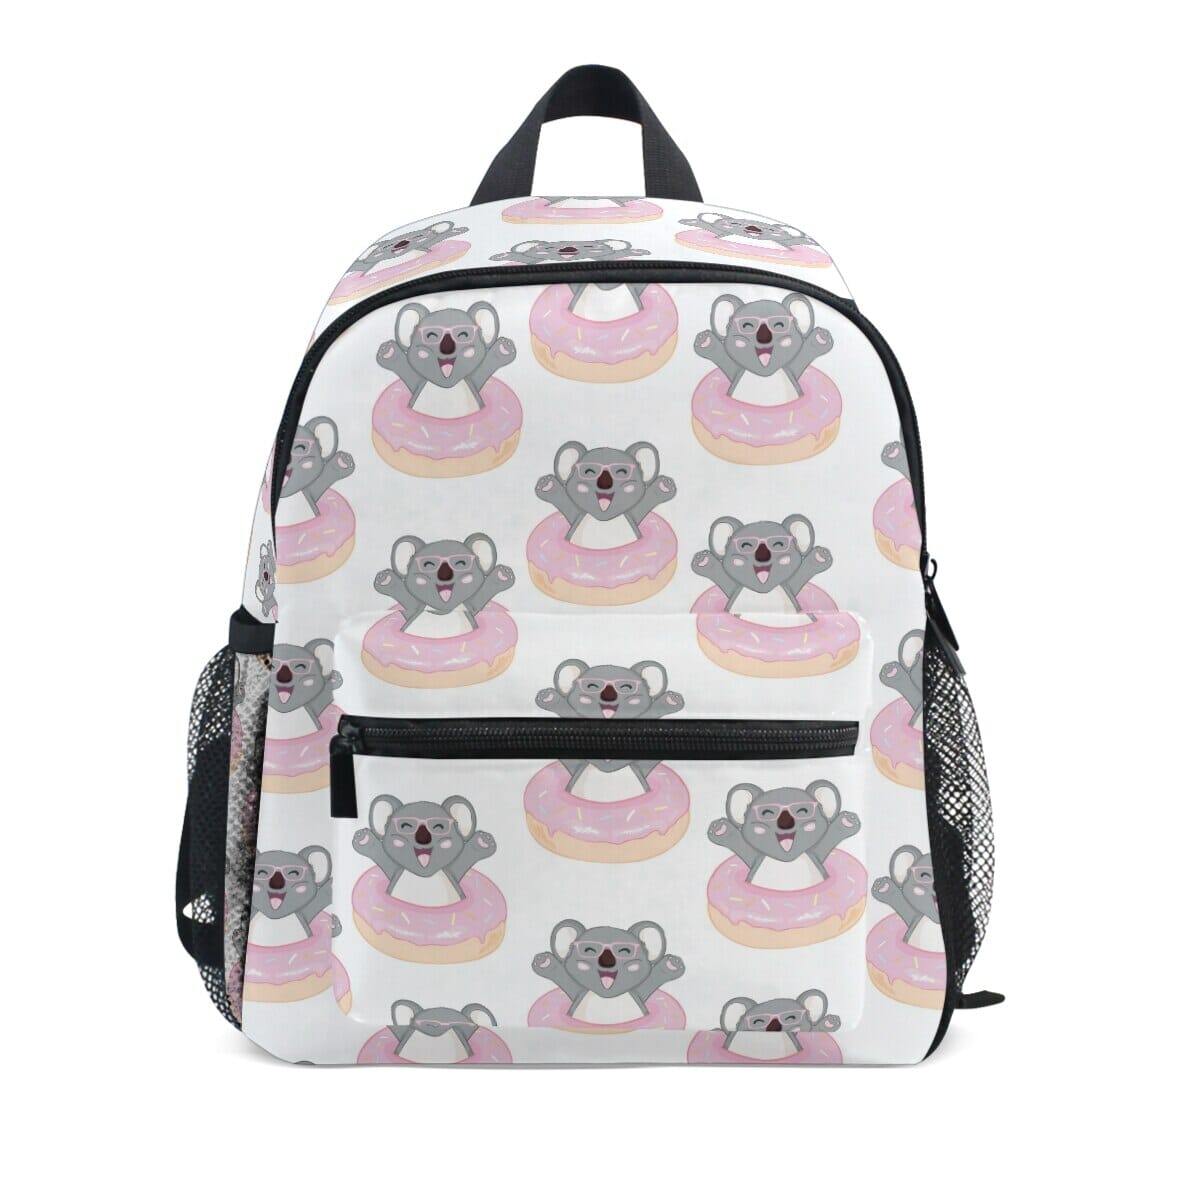 Koala Mini Backpack The Store Bags 01 